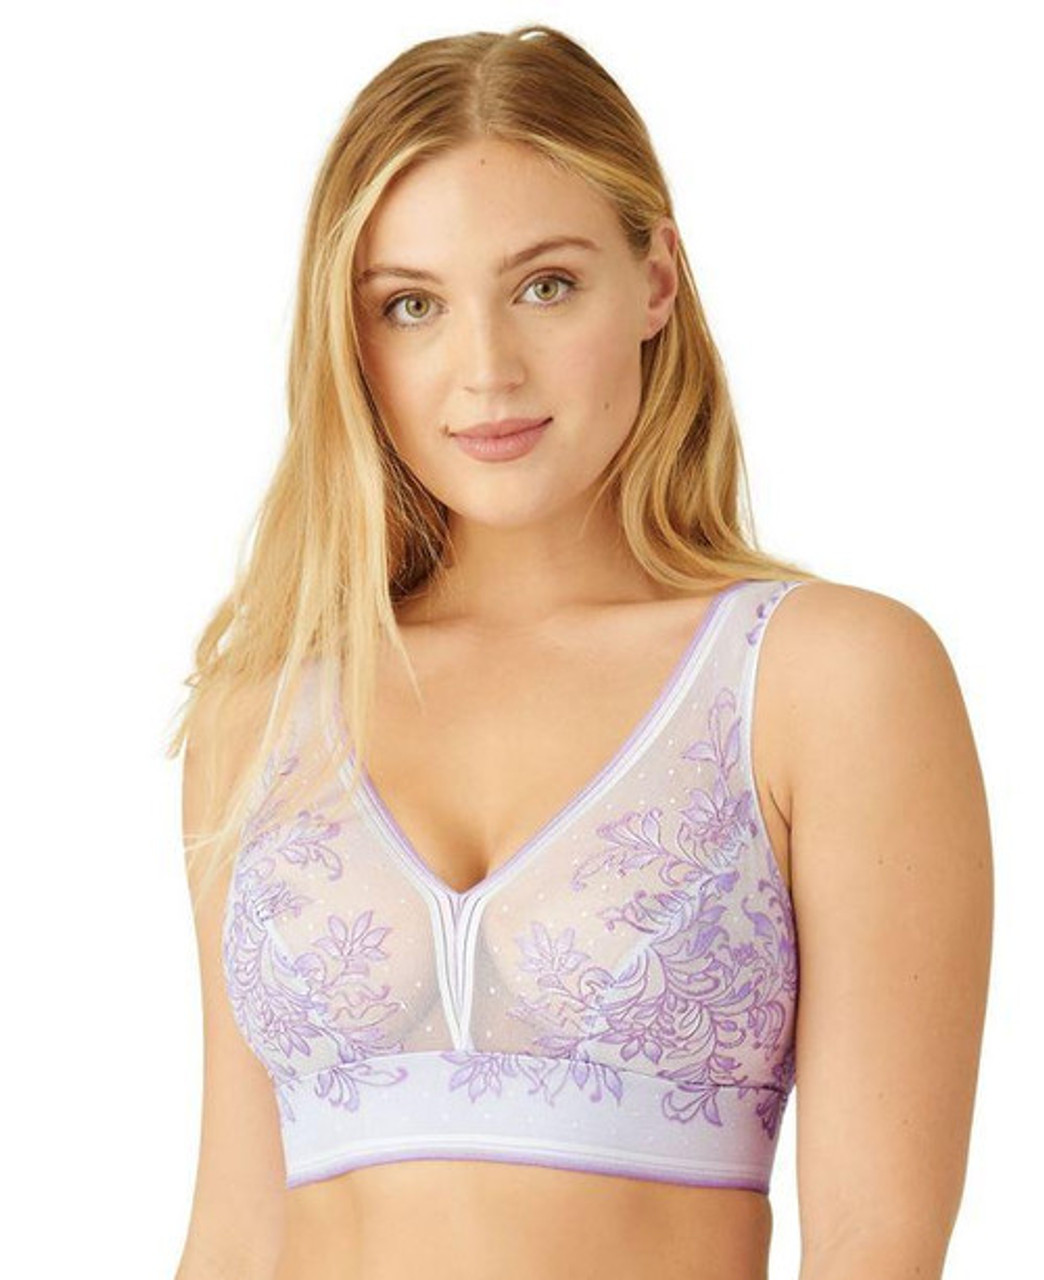 Wacoal cream colored bra, size 34DD EUC - $22 - From Zelda